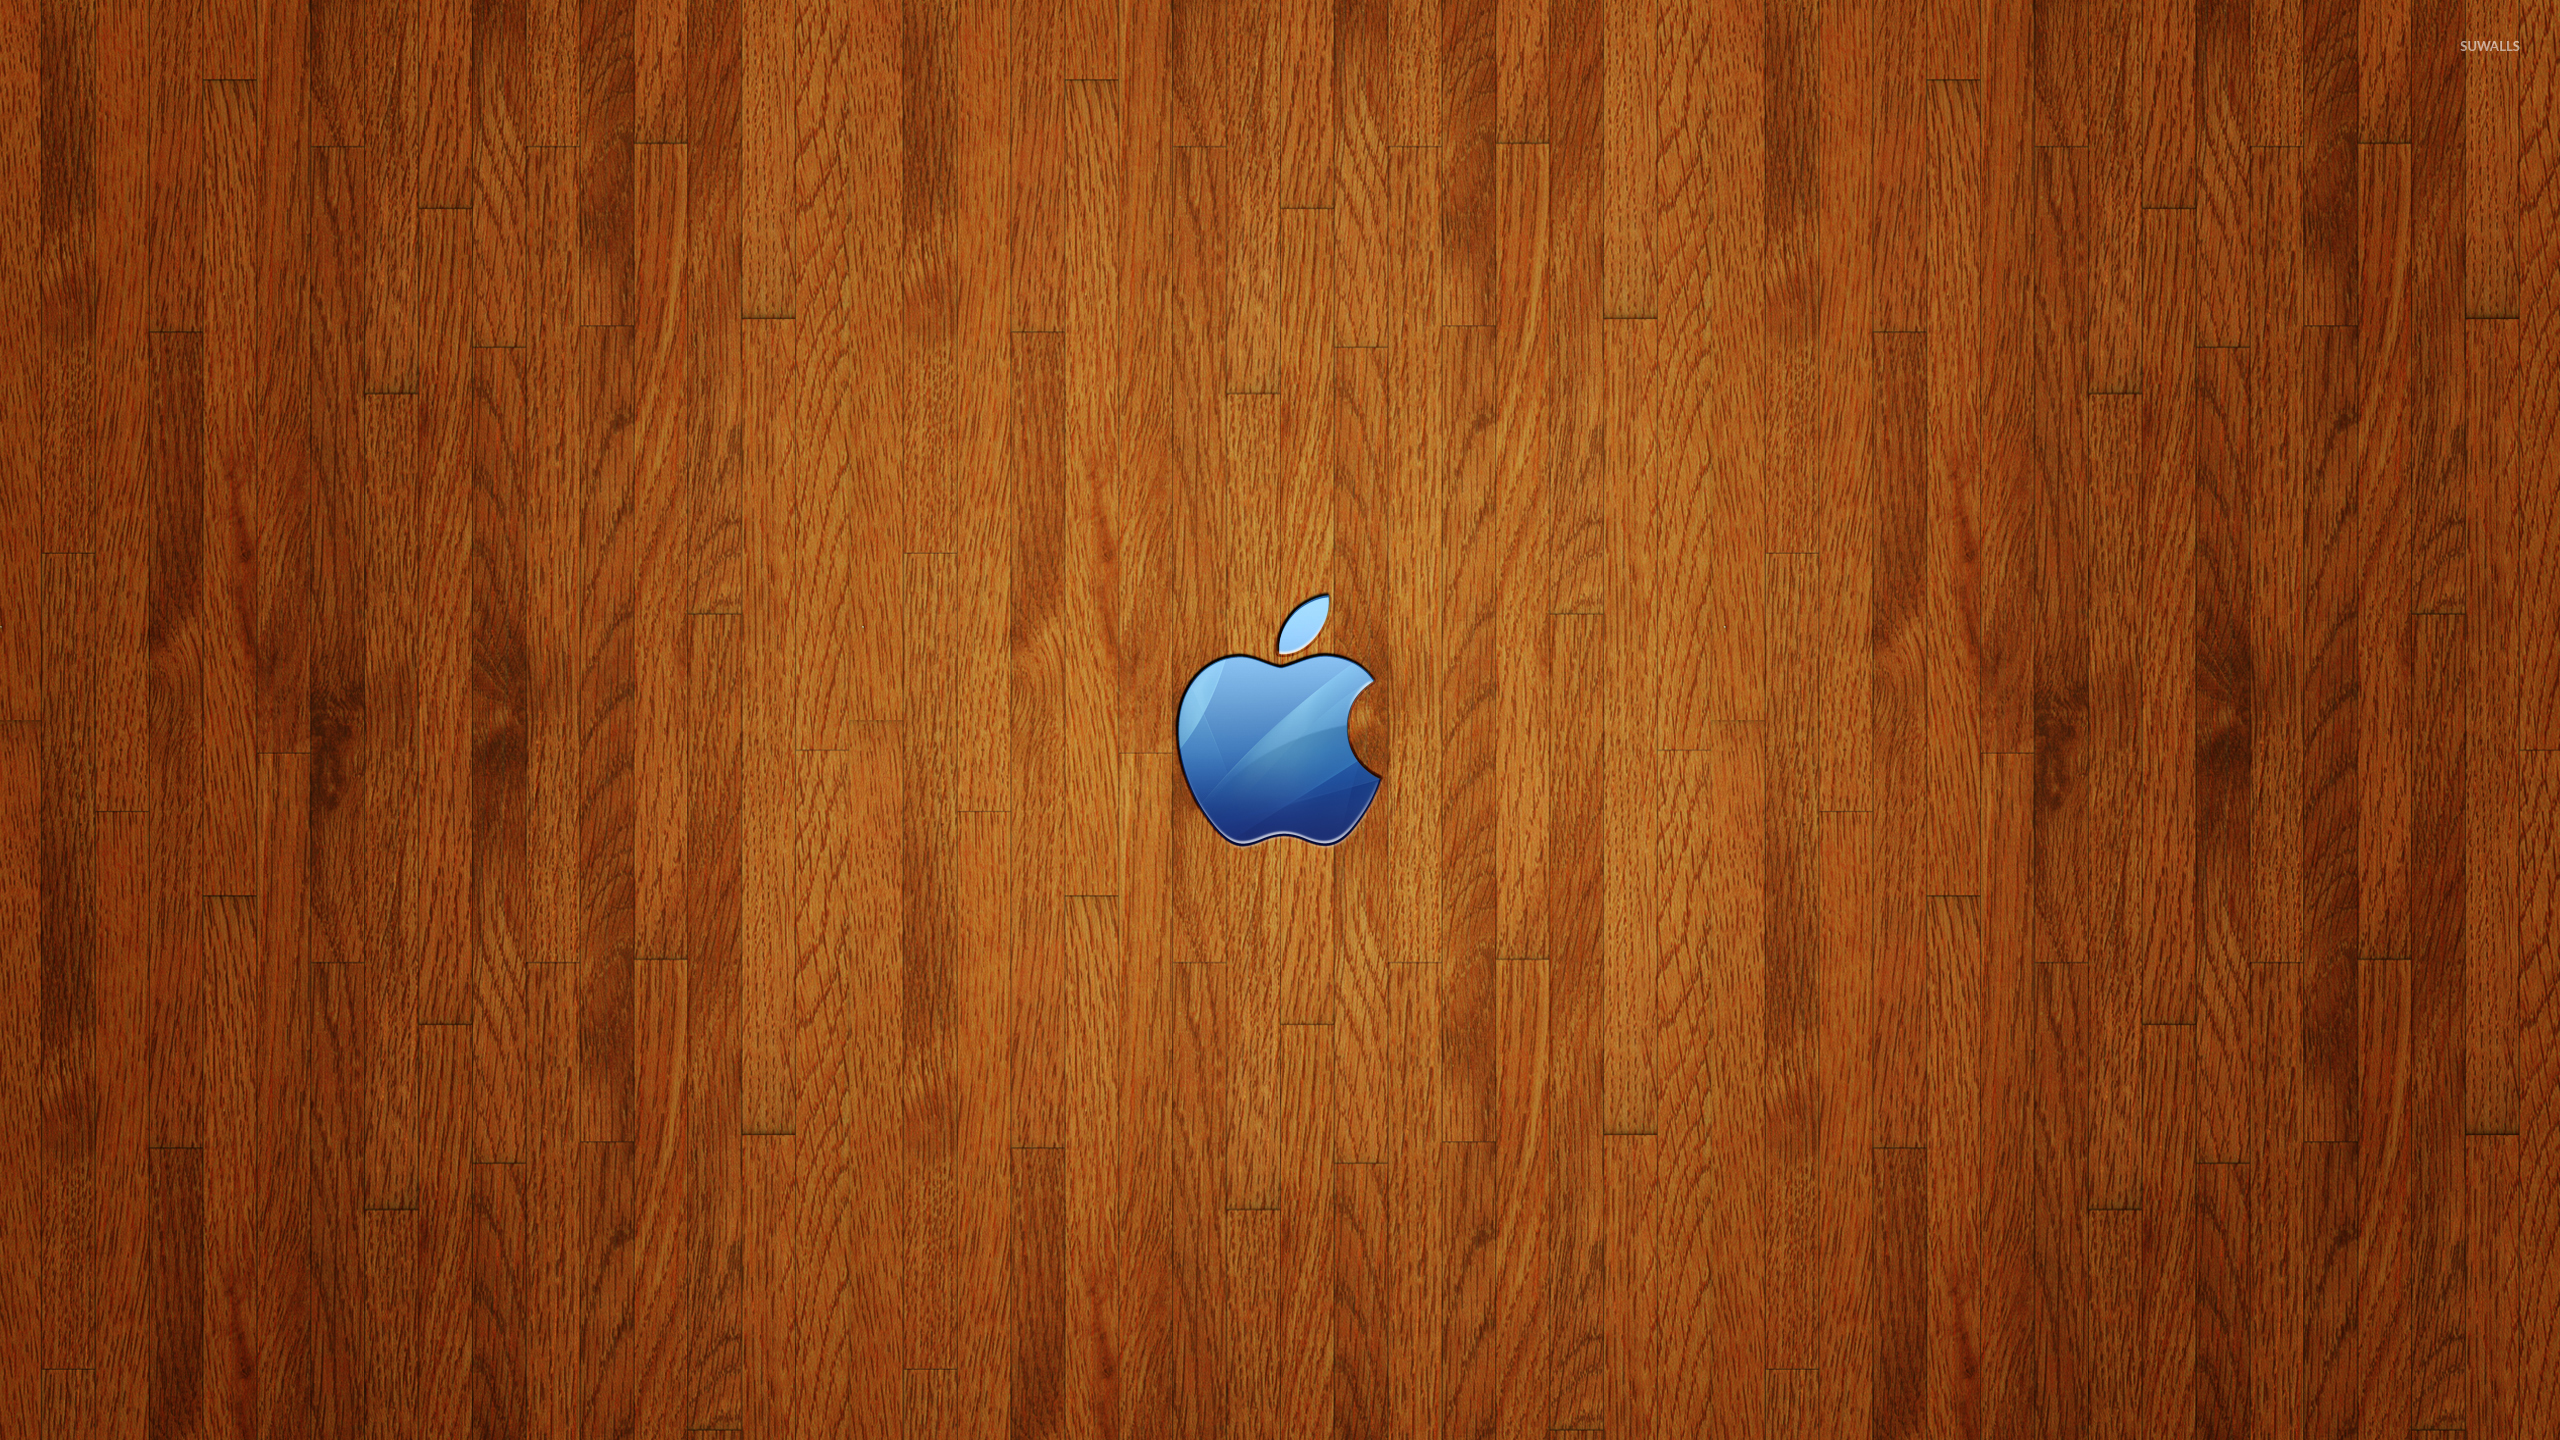 Blue Apple logo on wood wallpaper - Computer wallpapers - #53940